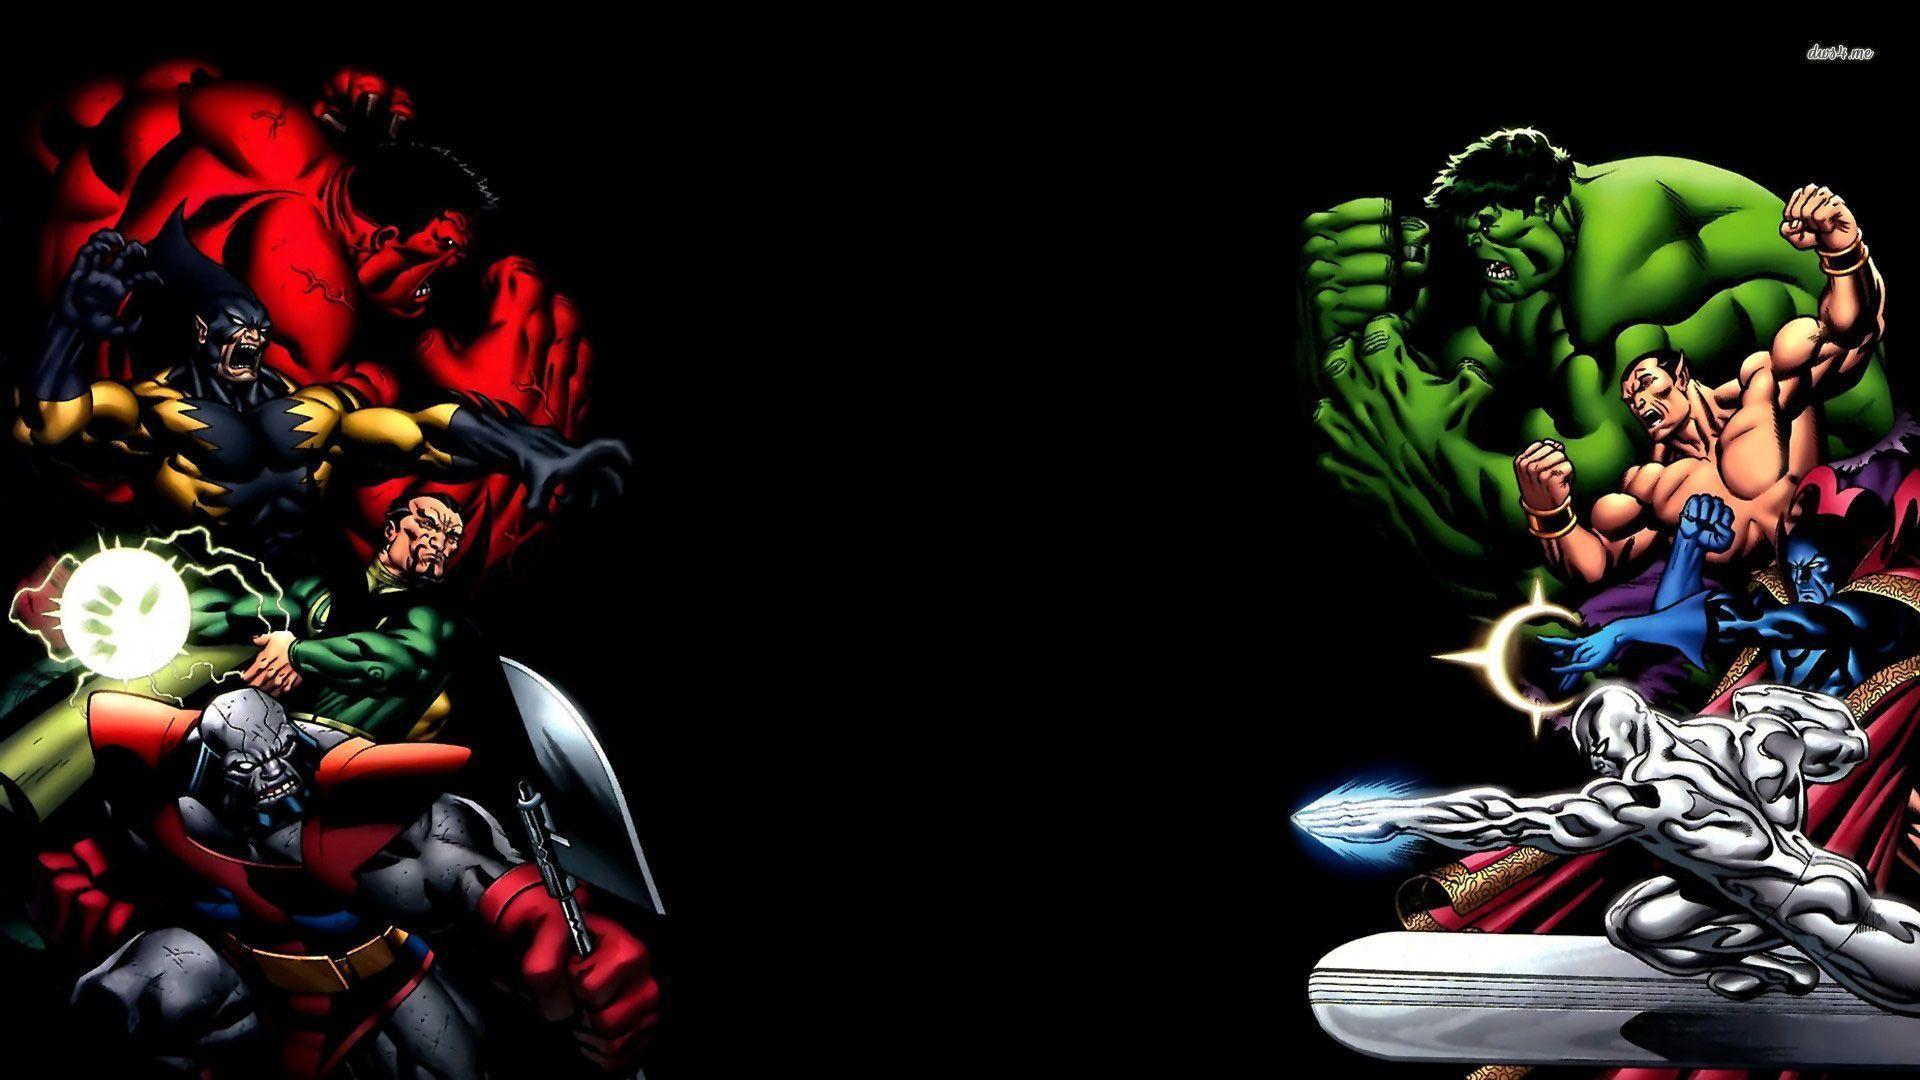 Villains vs superheroes wallpaper wallpaper - #